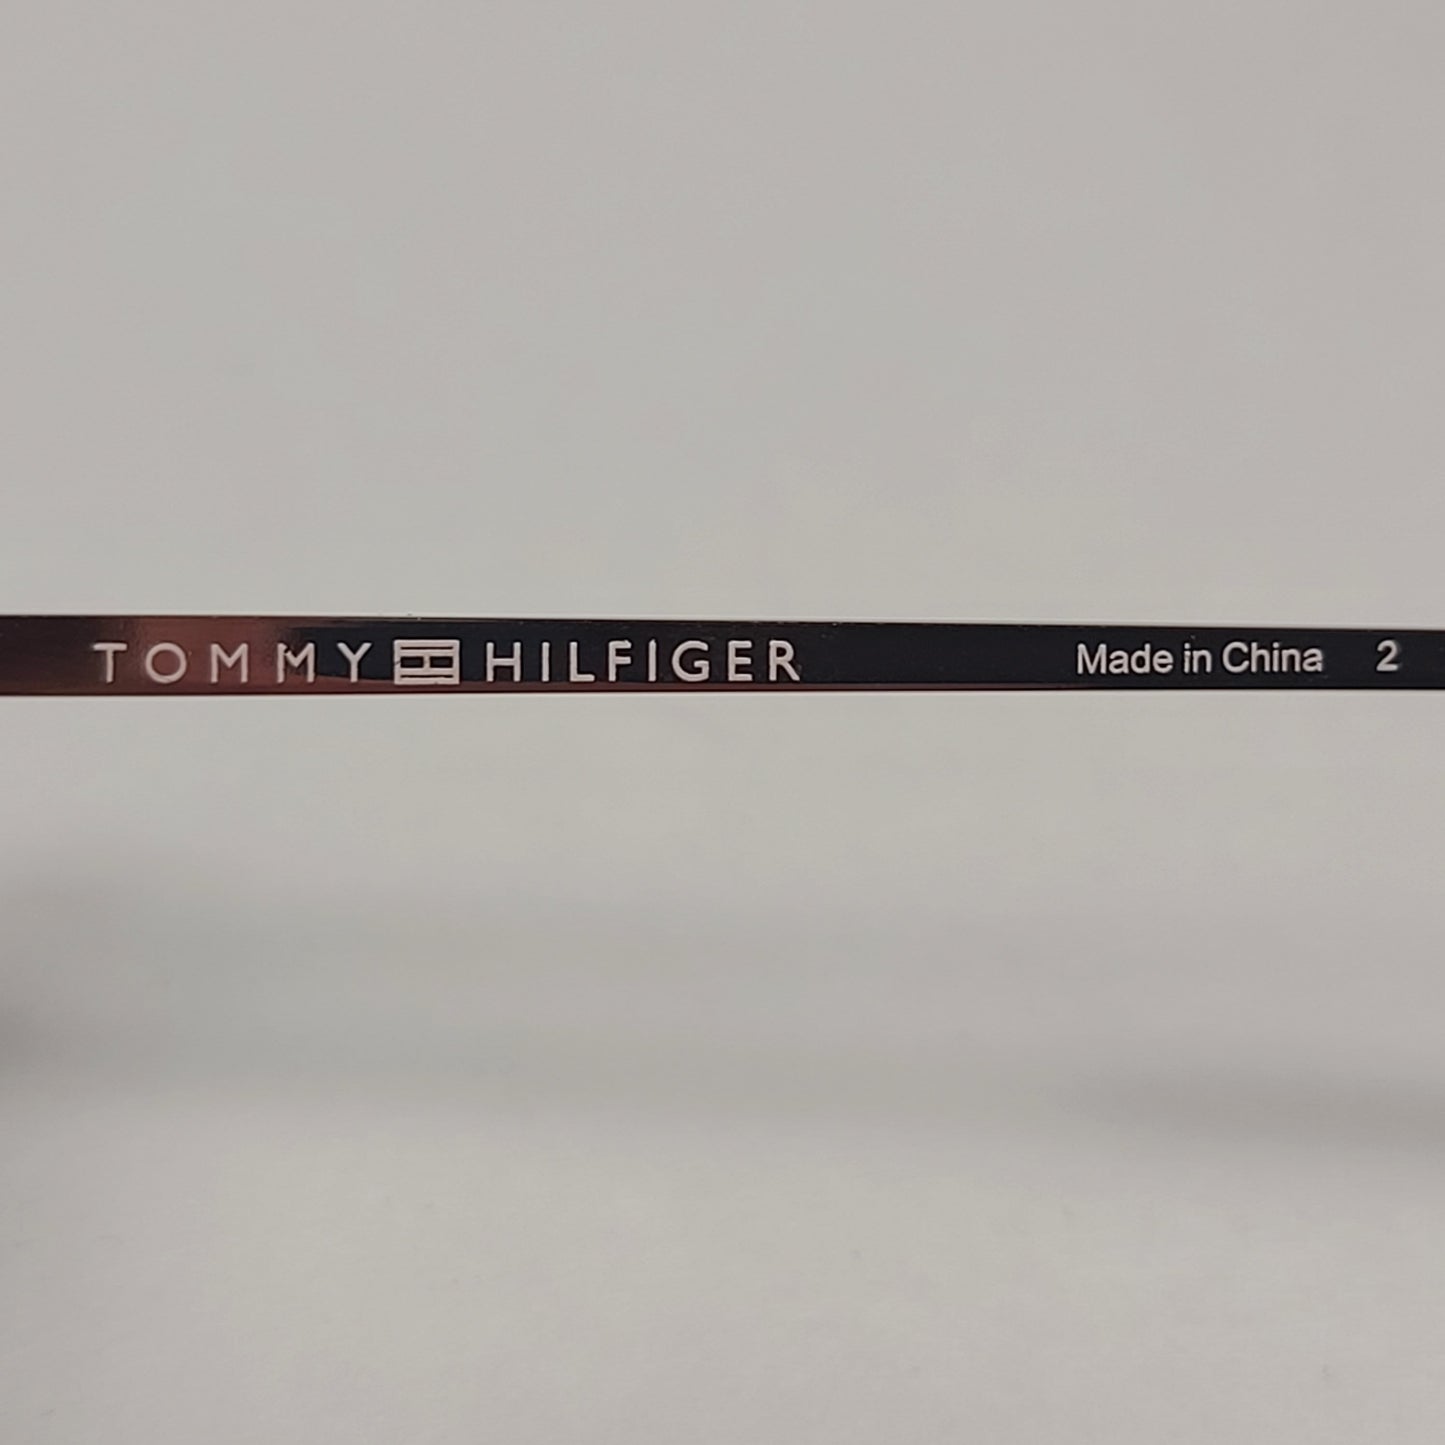 Tommy Hilfiger Nala Sunglasses Milk Tortoise And Copper Gold Frame Brown Gradient Lens NALA WP OL557 - Sunglasses